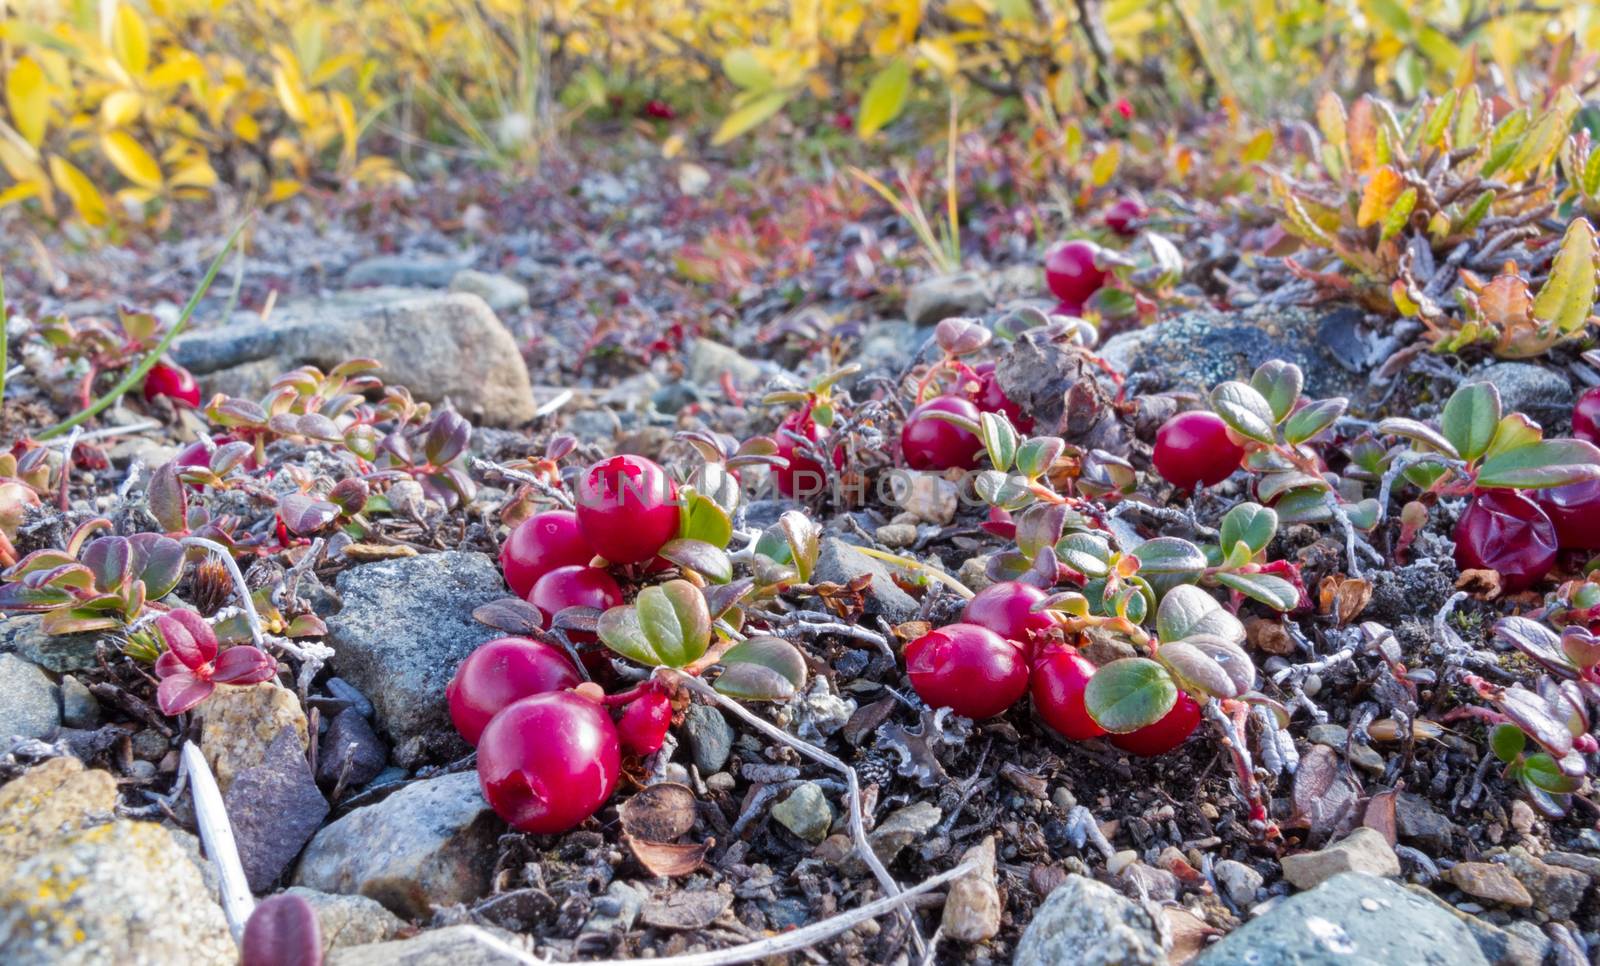 Cranberries Vaccinium vitis-idaea alpine plants by PiLens